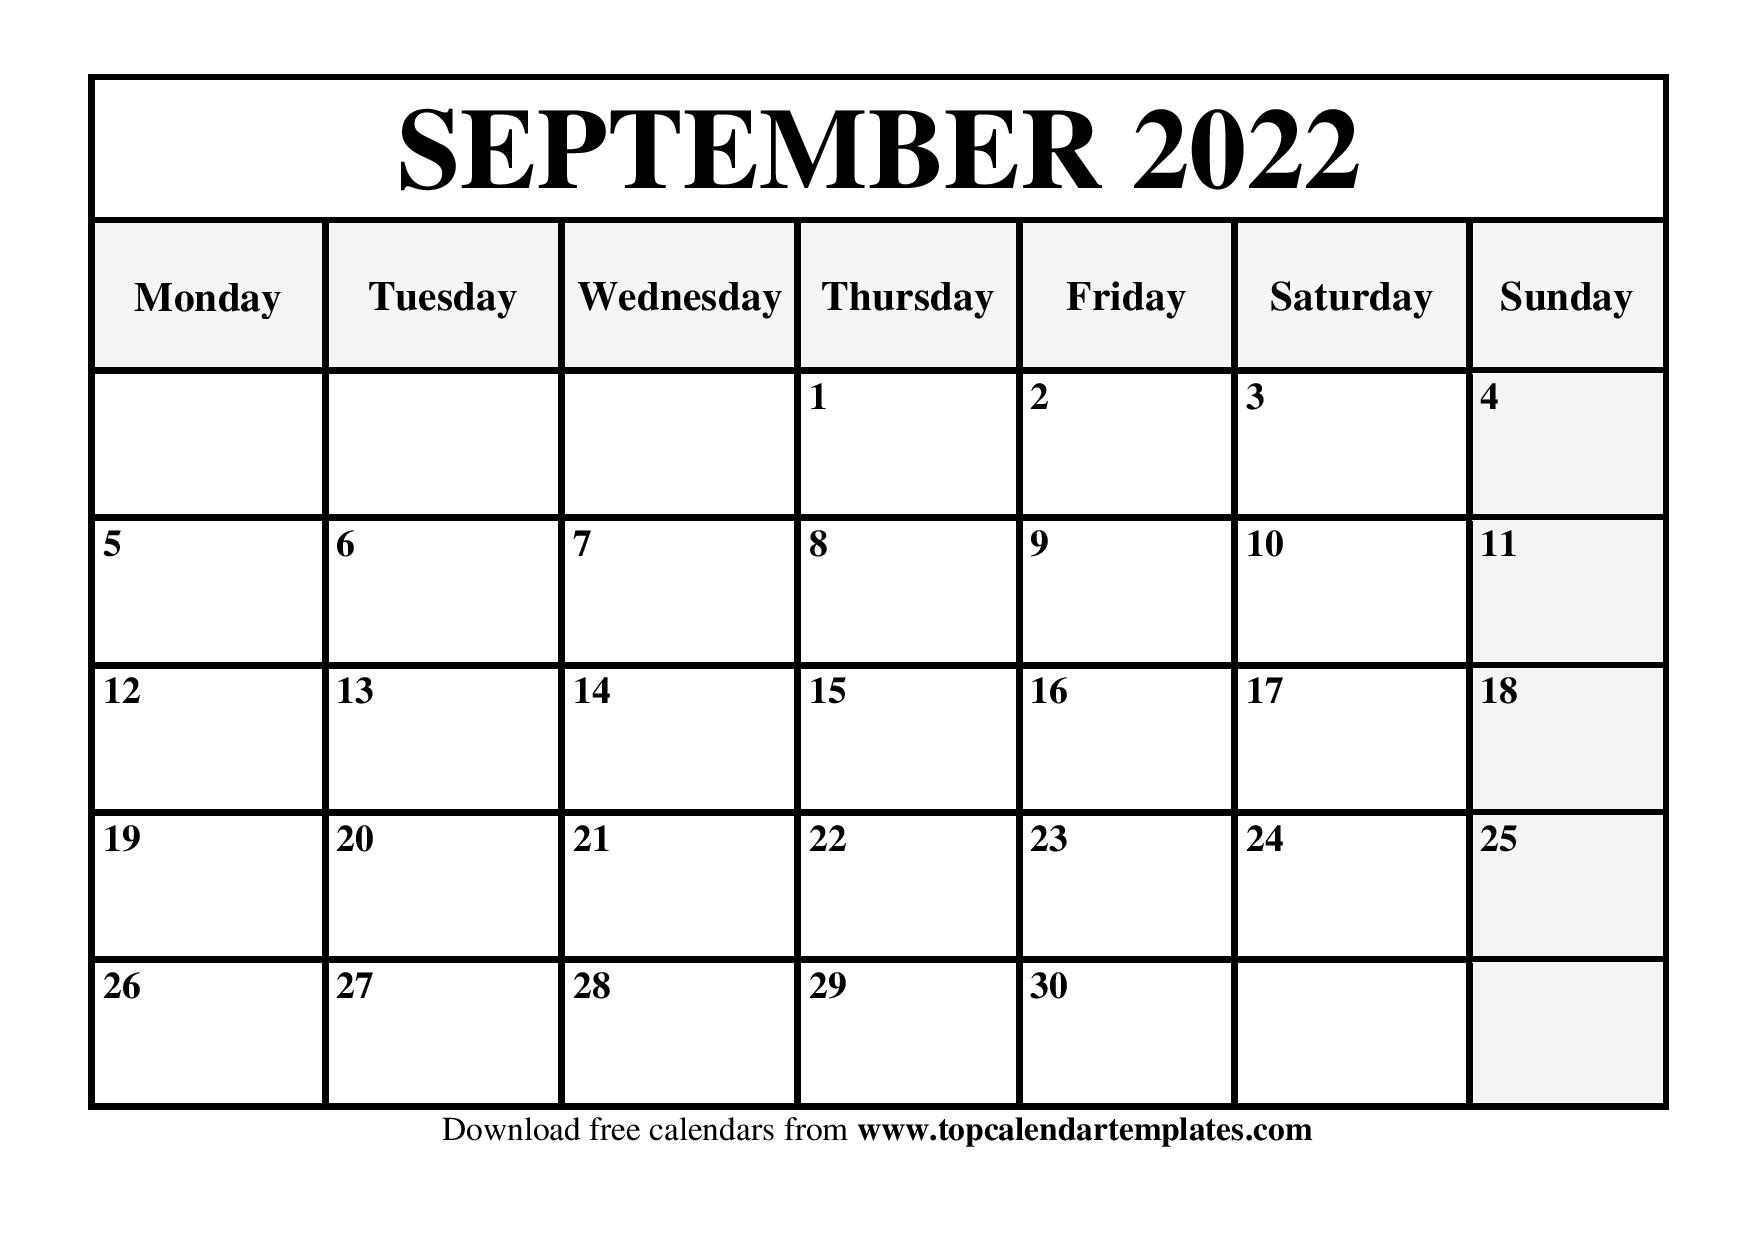 Free Printable Calendar September 2022 Printable Calendar September 2022 Templates - Pdf, Word, Excel